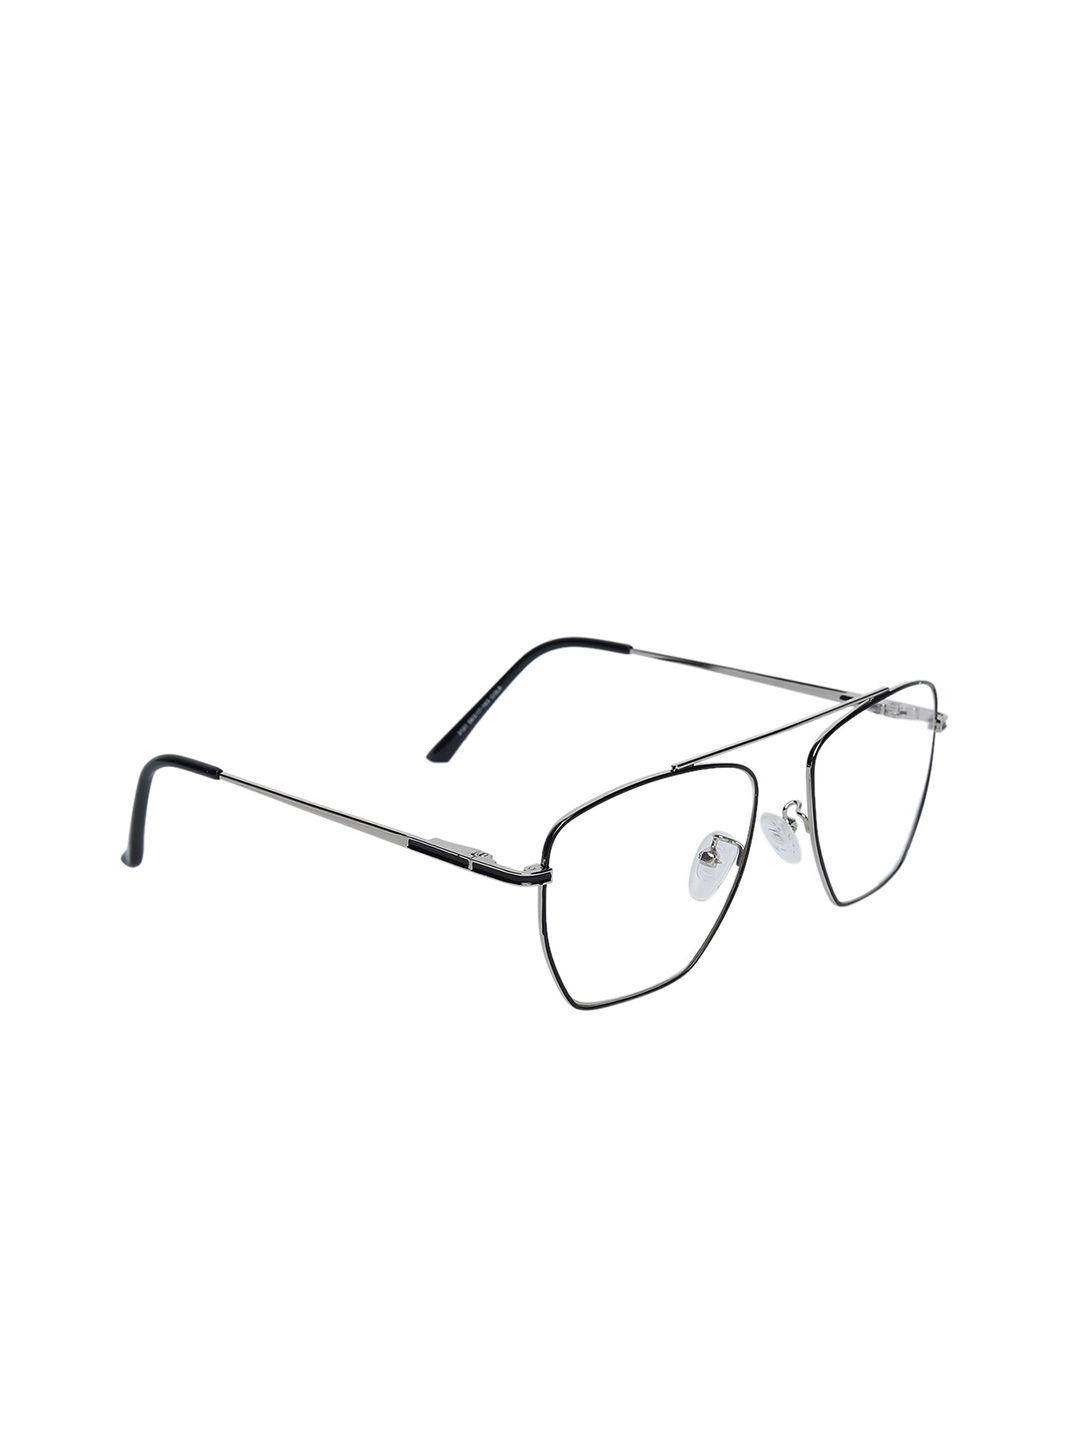 peter jones eyewear unisex black & silver-toned square blue light blocking glasses